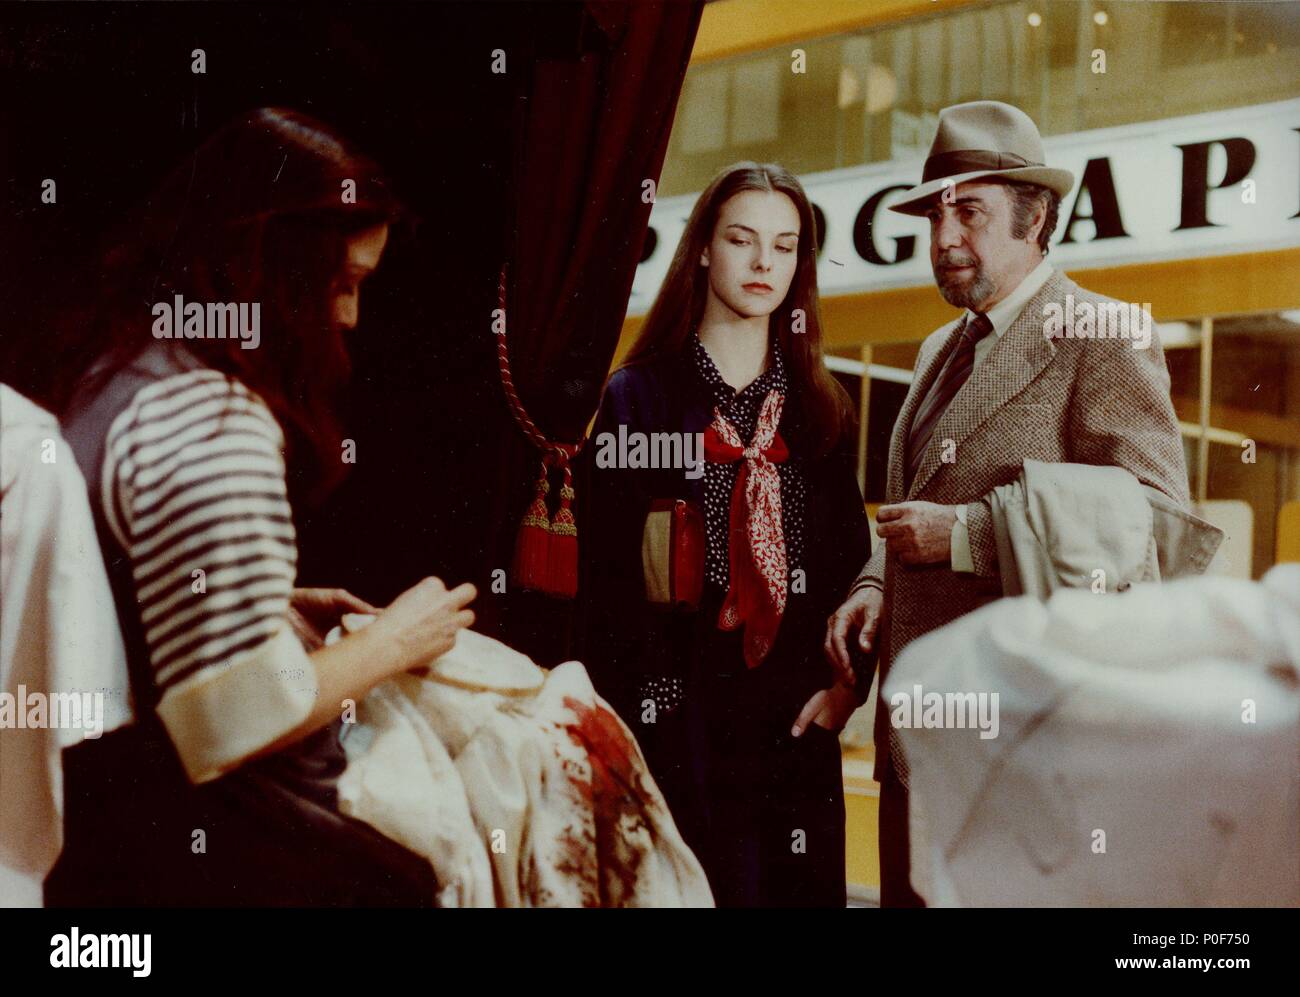 Original Film Title: CET OBSCUR OBJECT DU DESIR.  English Title: THAT OBSCURE OBJECT OF DESIRE.  Film Director: LUIS BUNUEL.  Year: 1977.  Stars: CAROLE BOUQUET; FERNANDO REY. Credit: GREENWICH/GALAXIE/IN CINE / Album Stock Photo